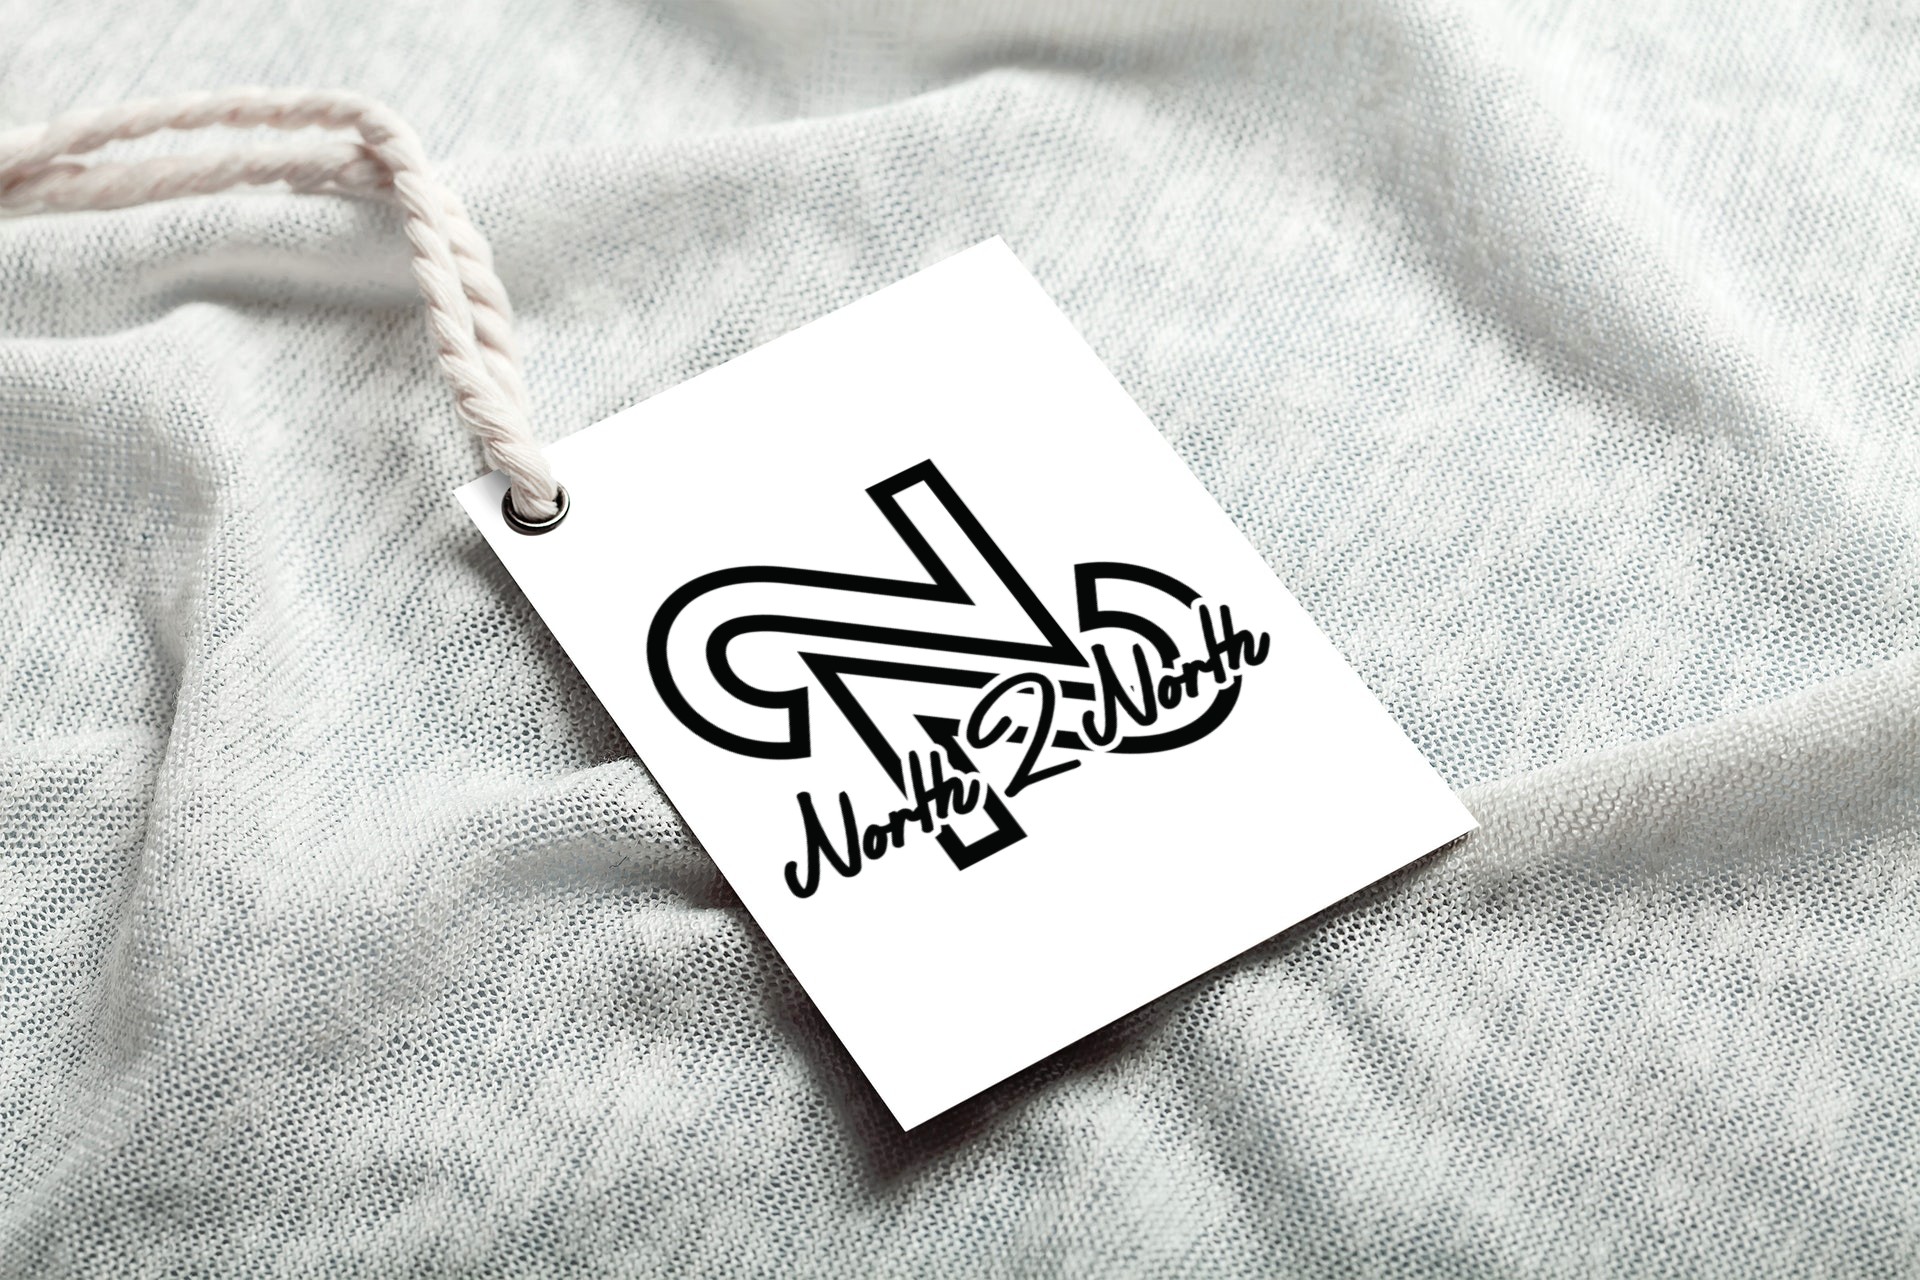 North 2 North Logo Design Clothing Brand